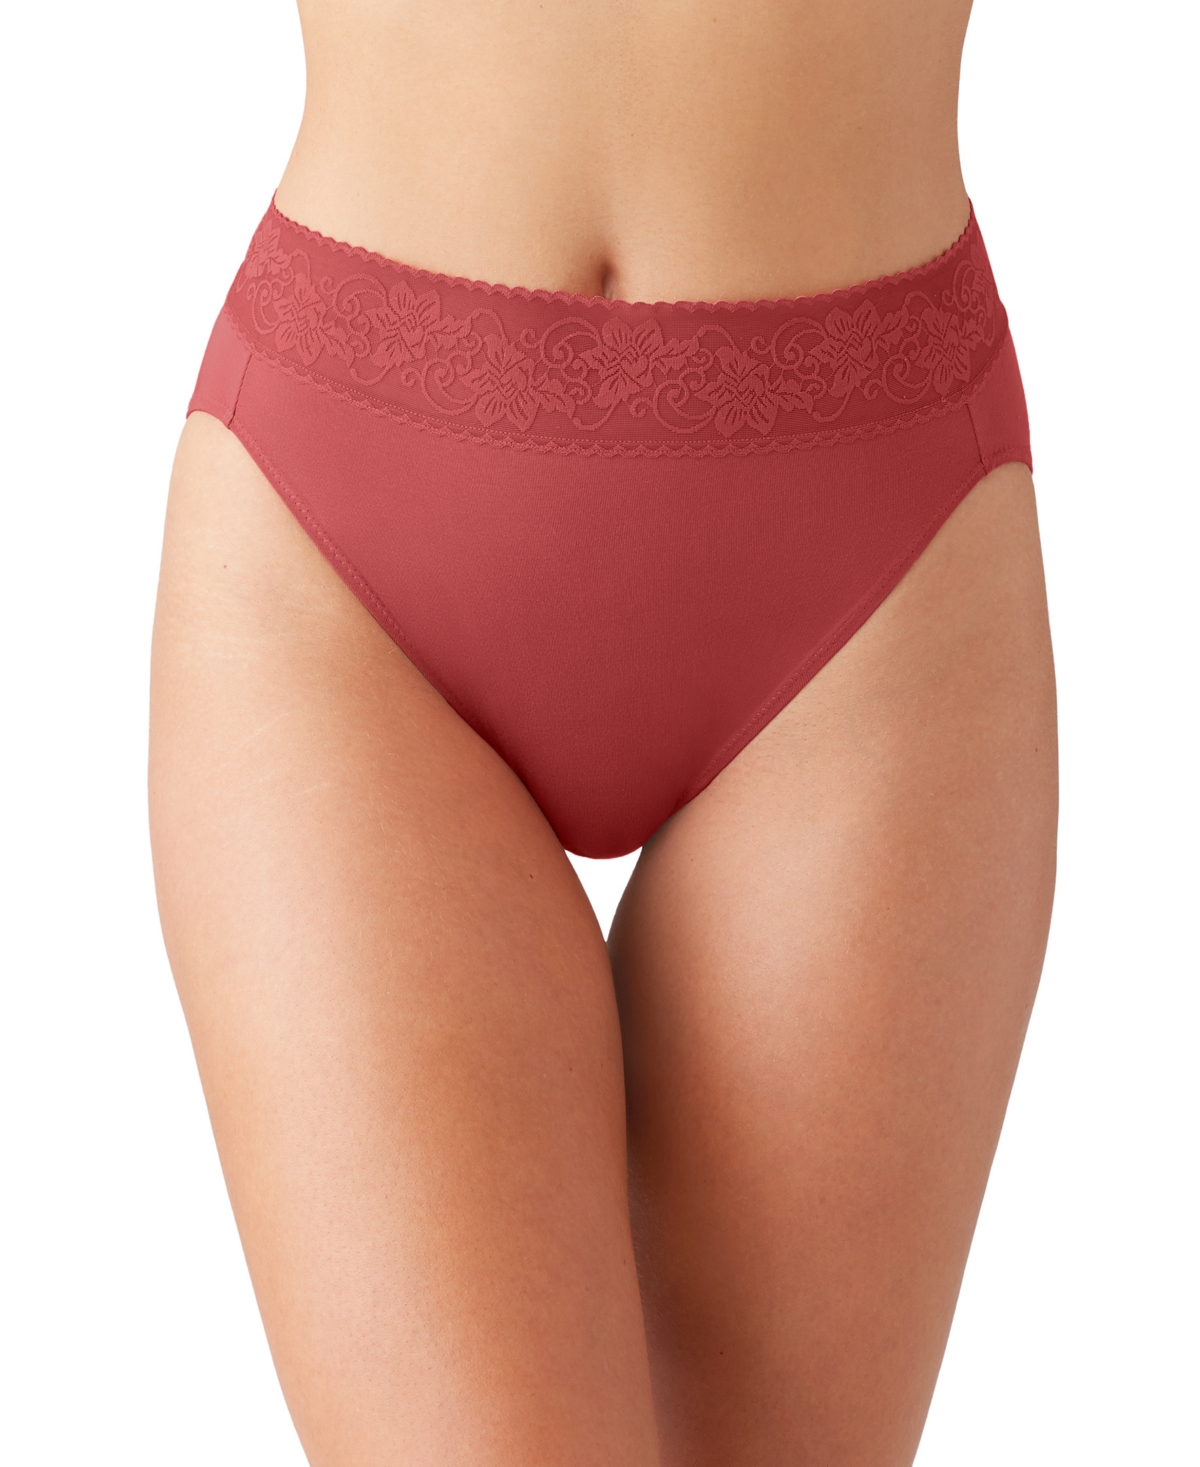 Wacoal Women's Comfort Touch High Cut Underwear 871353 In Garnet Rose